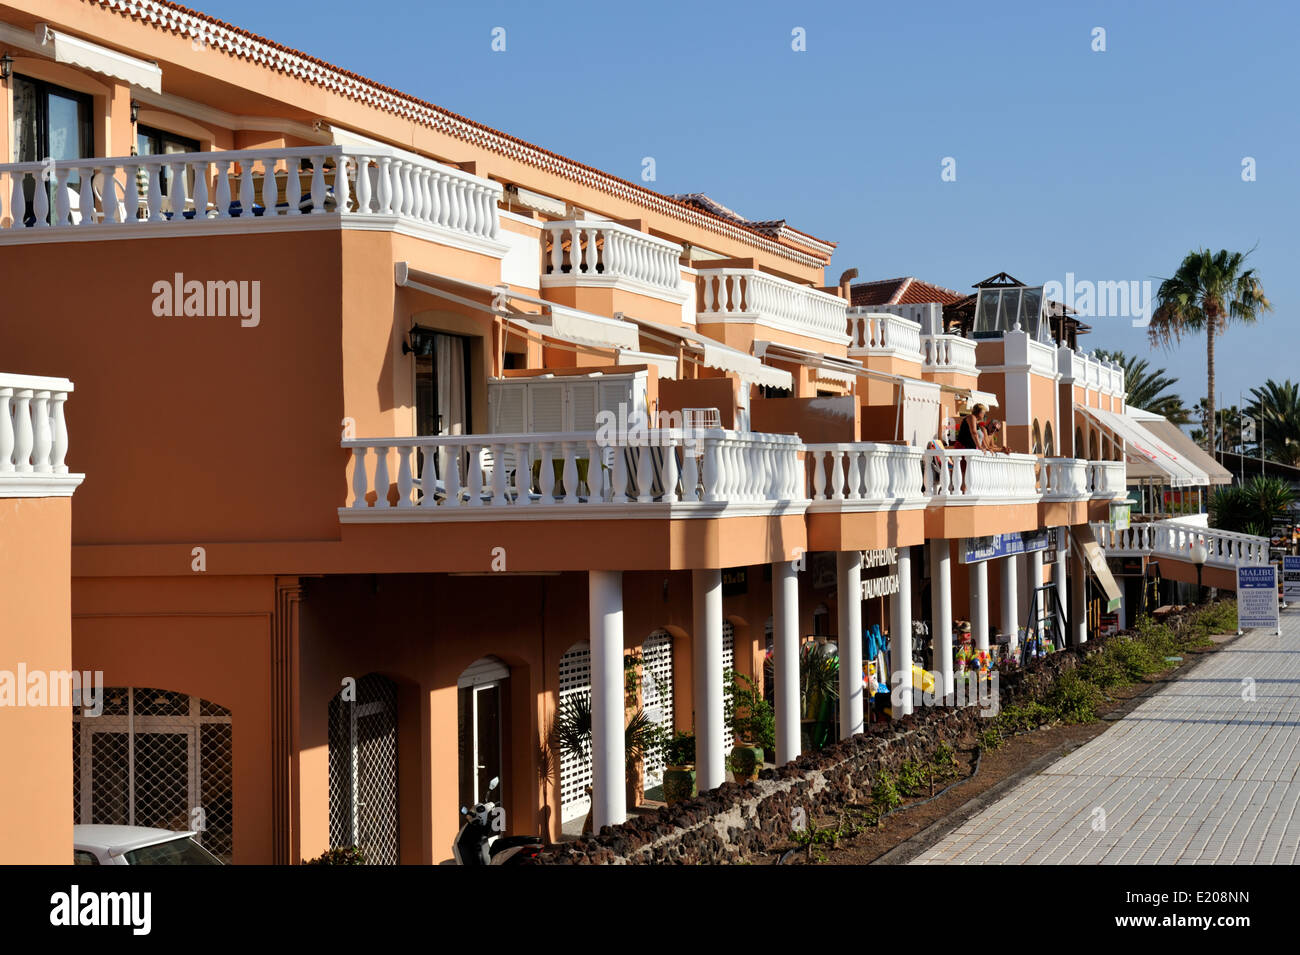 Hotel apartment balconies with shops below, Arona, Las Americas, Tenerife Stock Photo